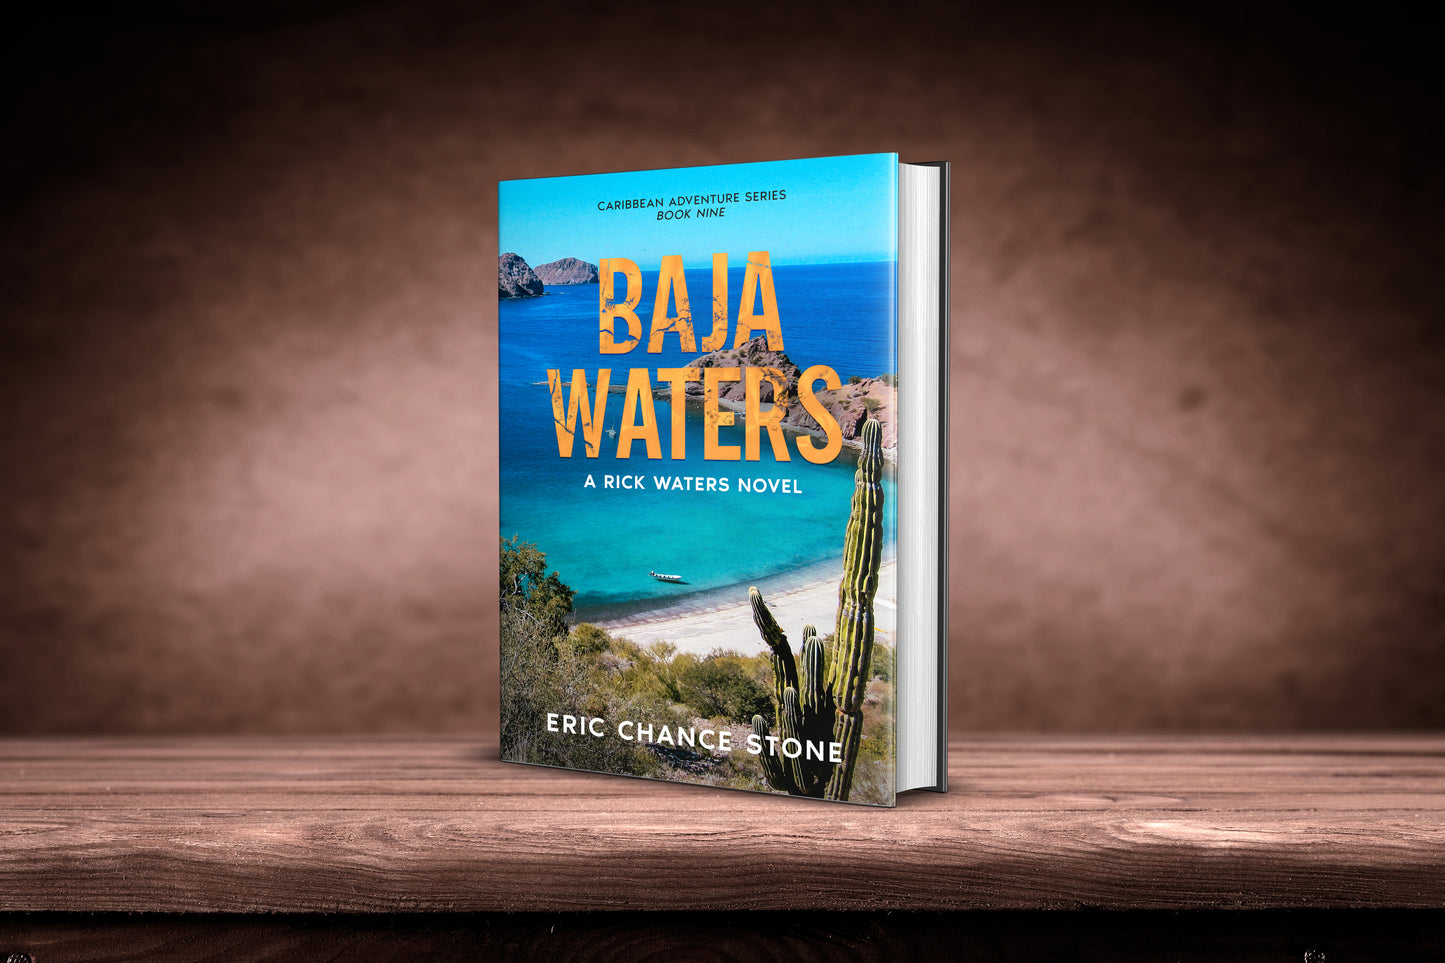 Baja Waters Paperback - Book 9: A Rick Waters Novel (Caribbean Adventure Series)